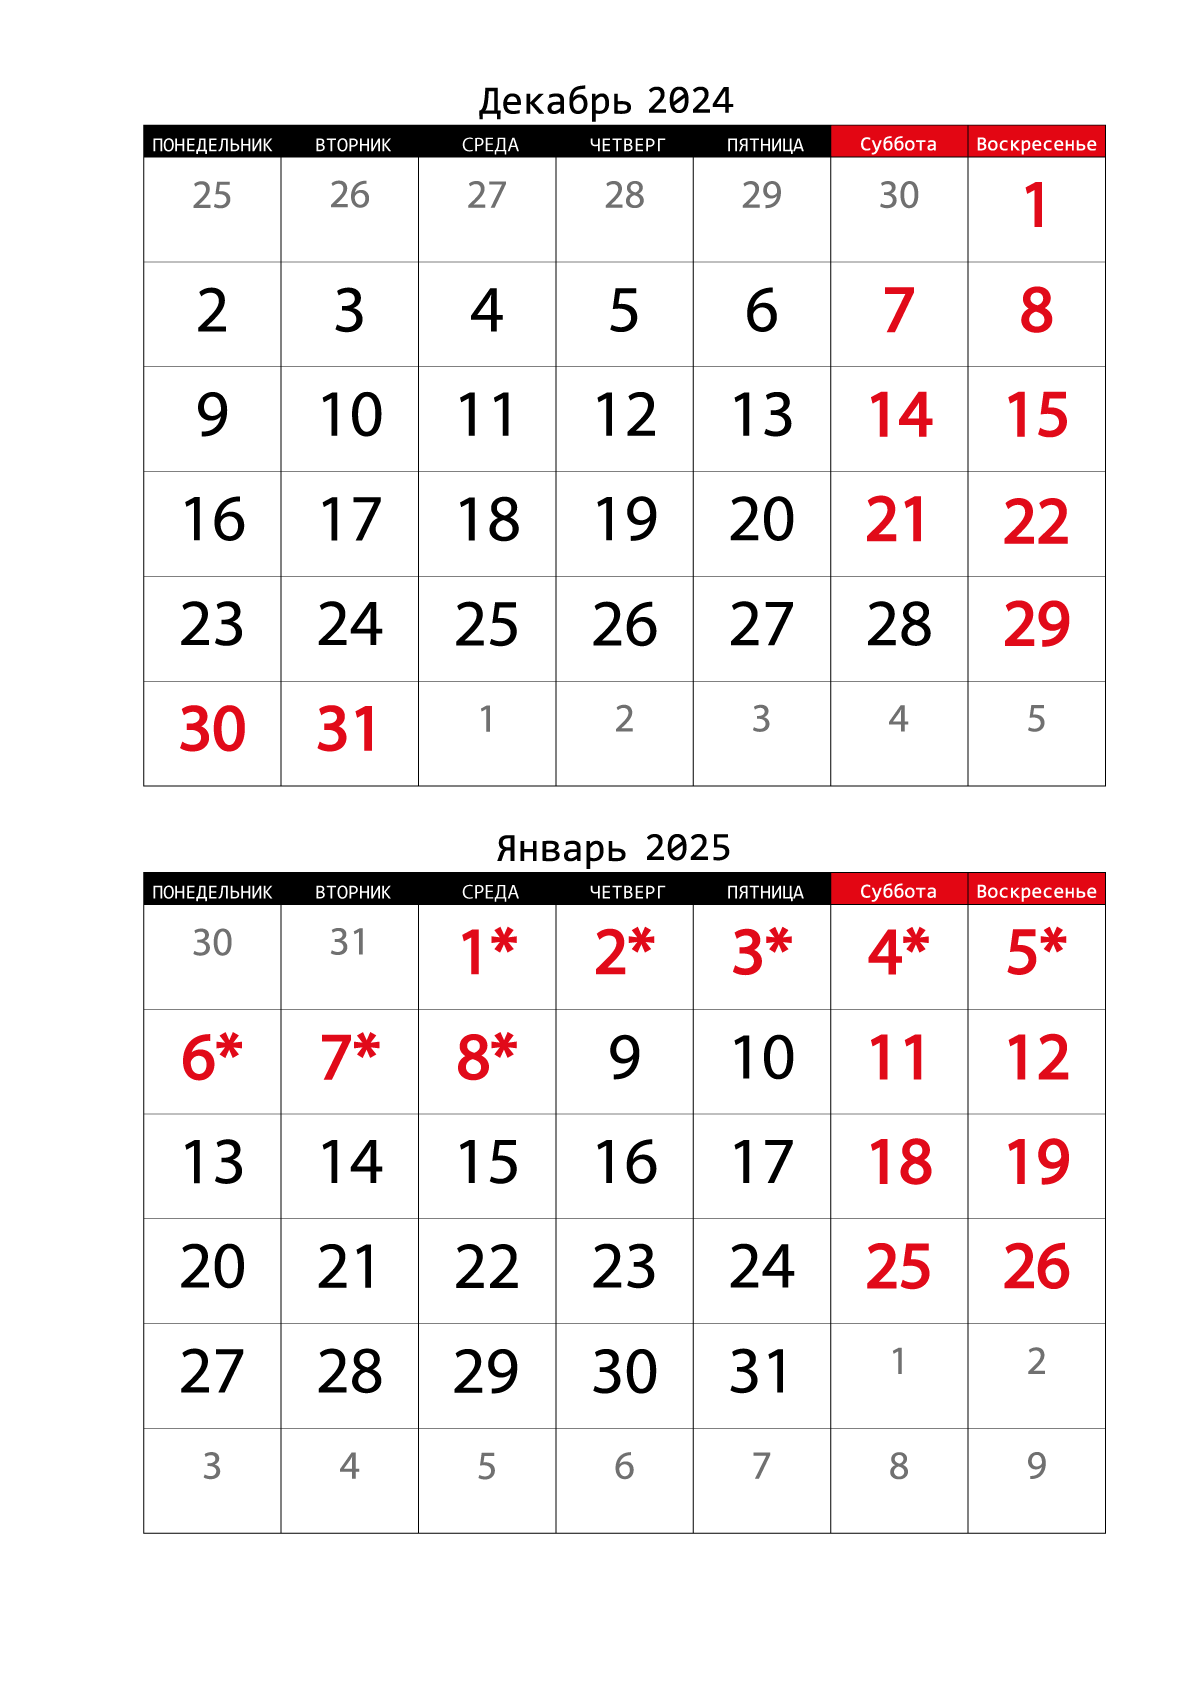 Декабрь - Январь 2024 календарь на 2 месяца